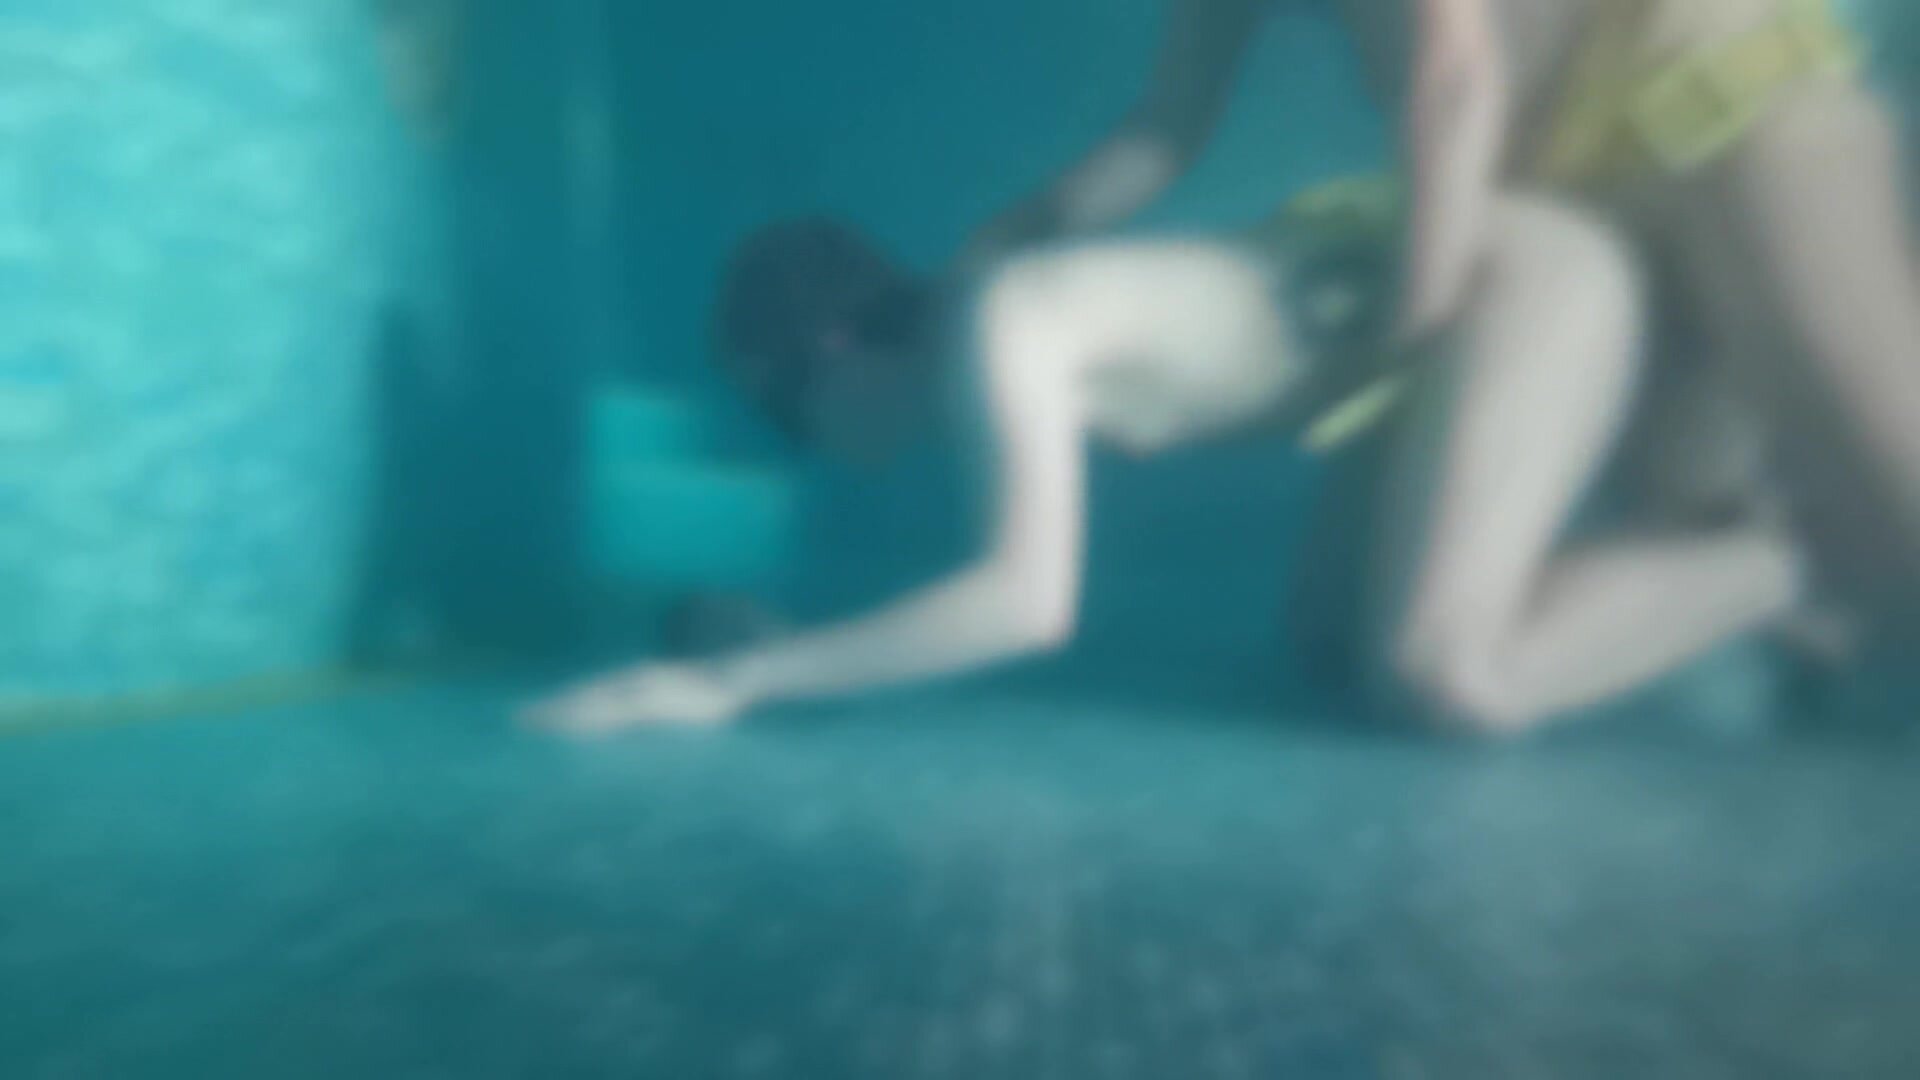 Getting fucked underwater.